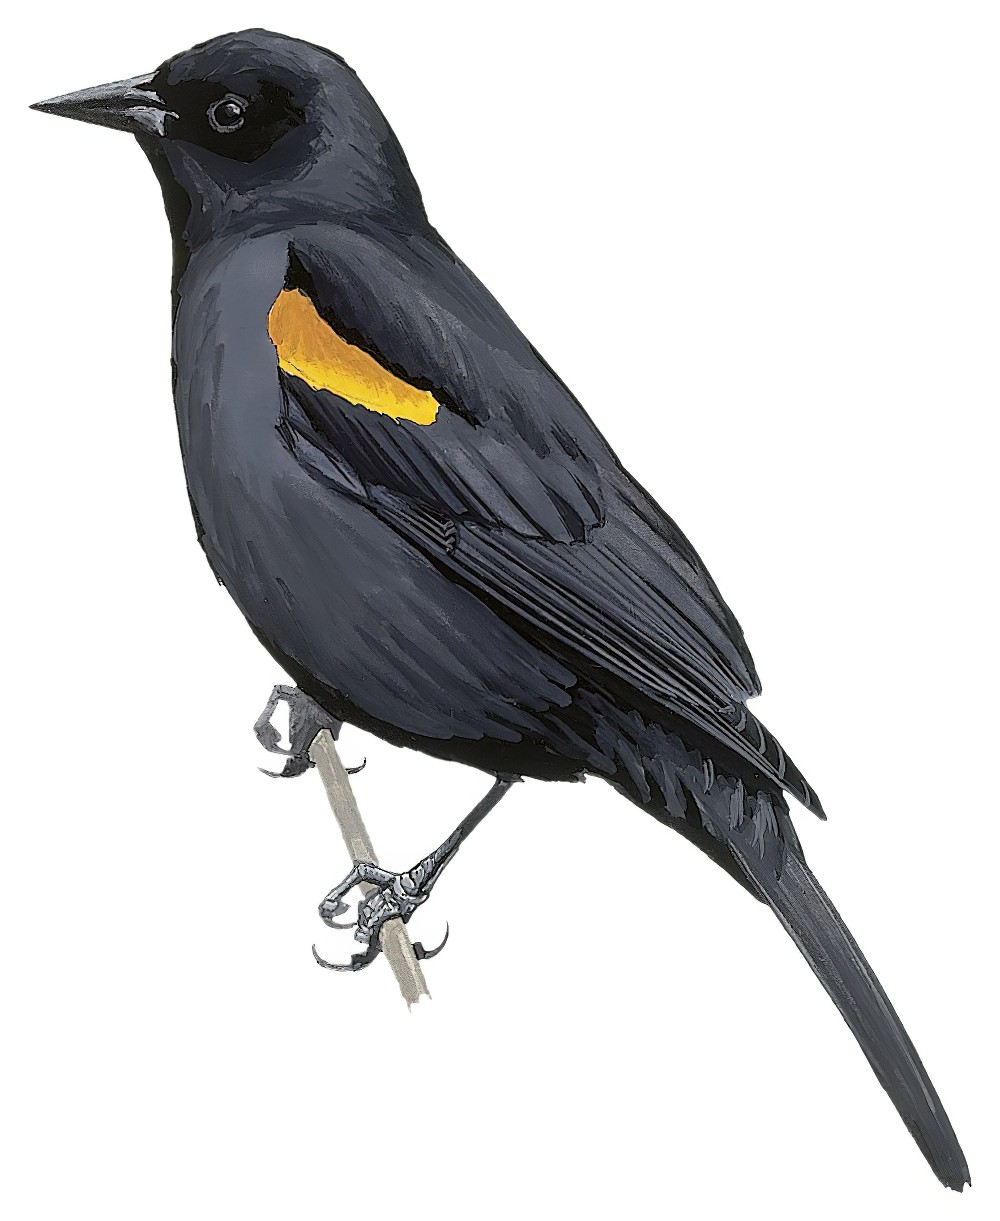 Tawny-shouldered Blackbird / Agelaius humeralis